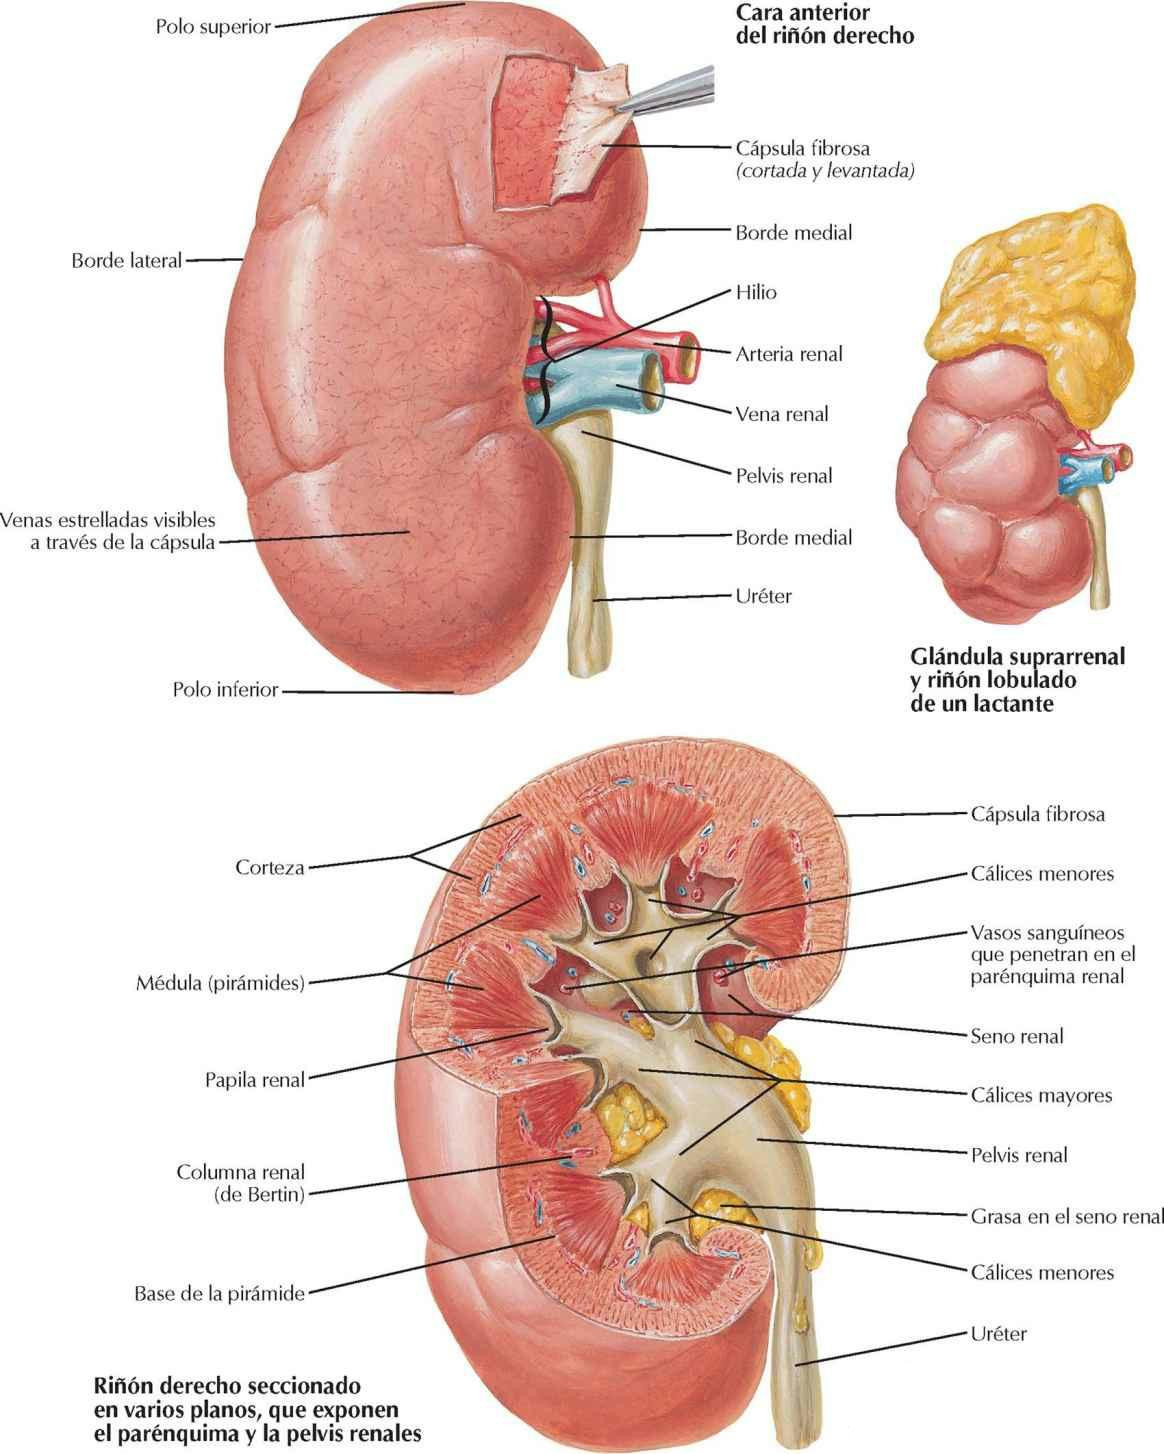 Estructura macroscópica del riñón